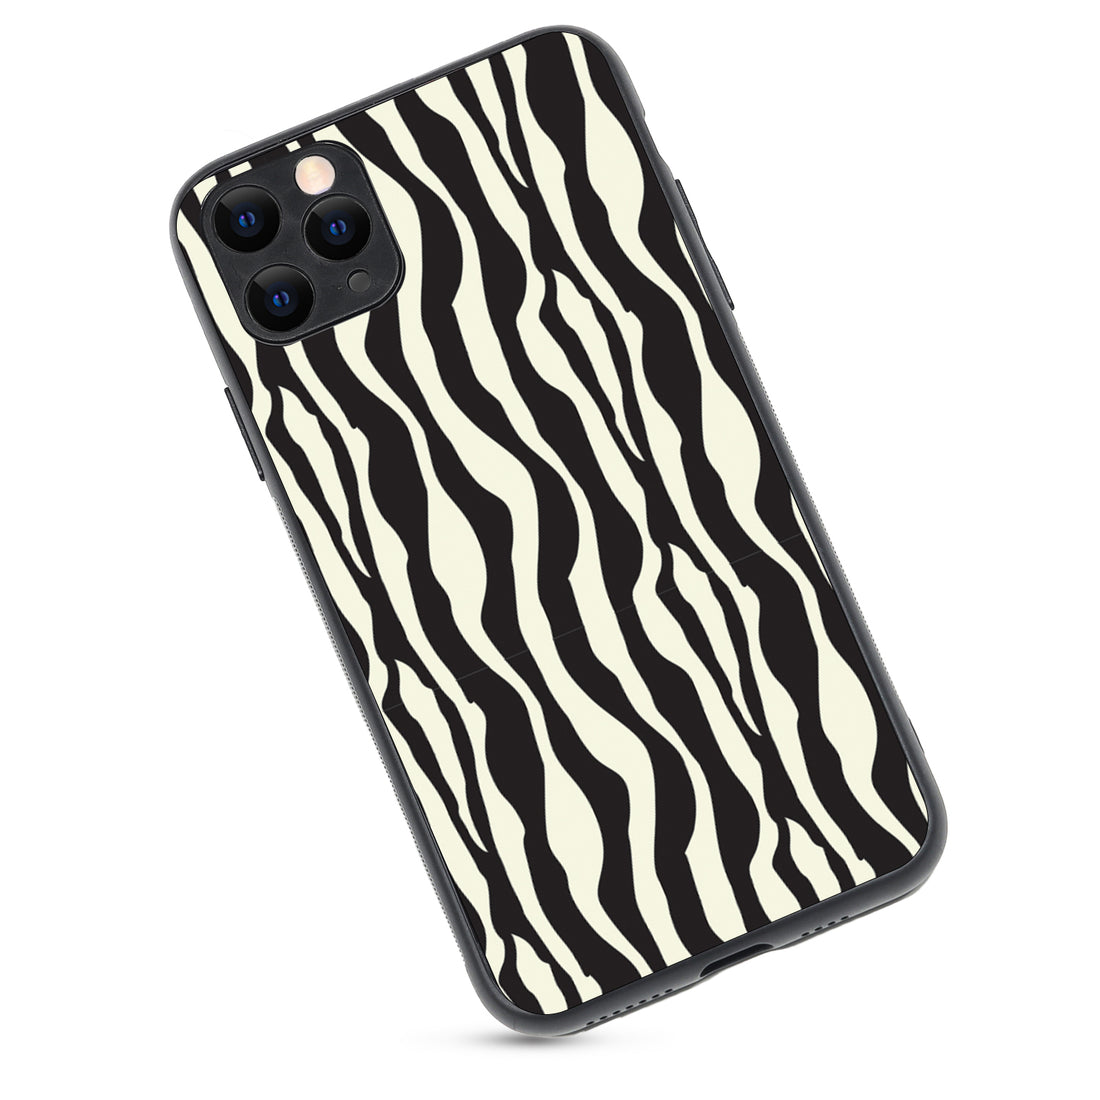 Zebra Animal Print iPhone 11 Pro Max Case